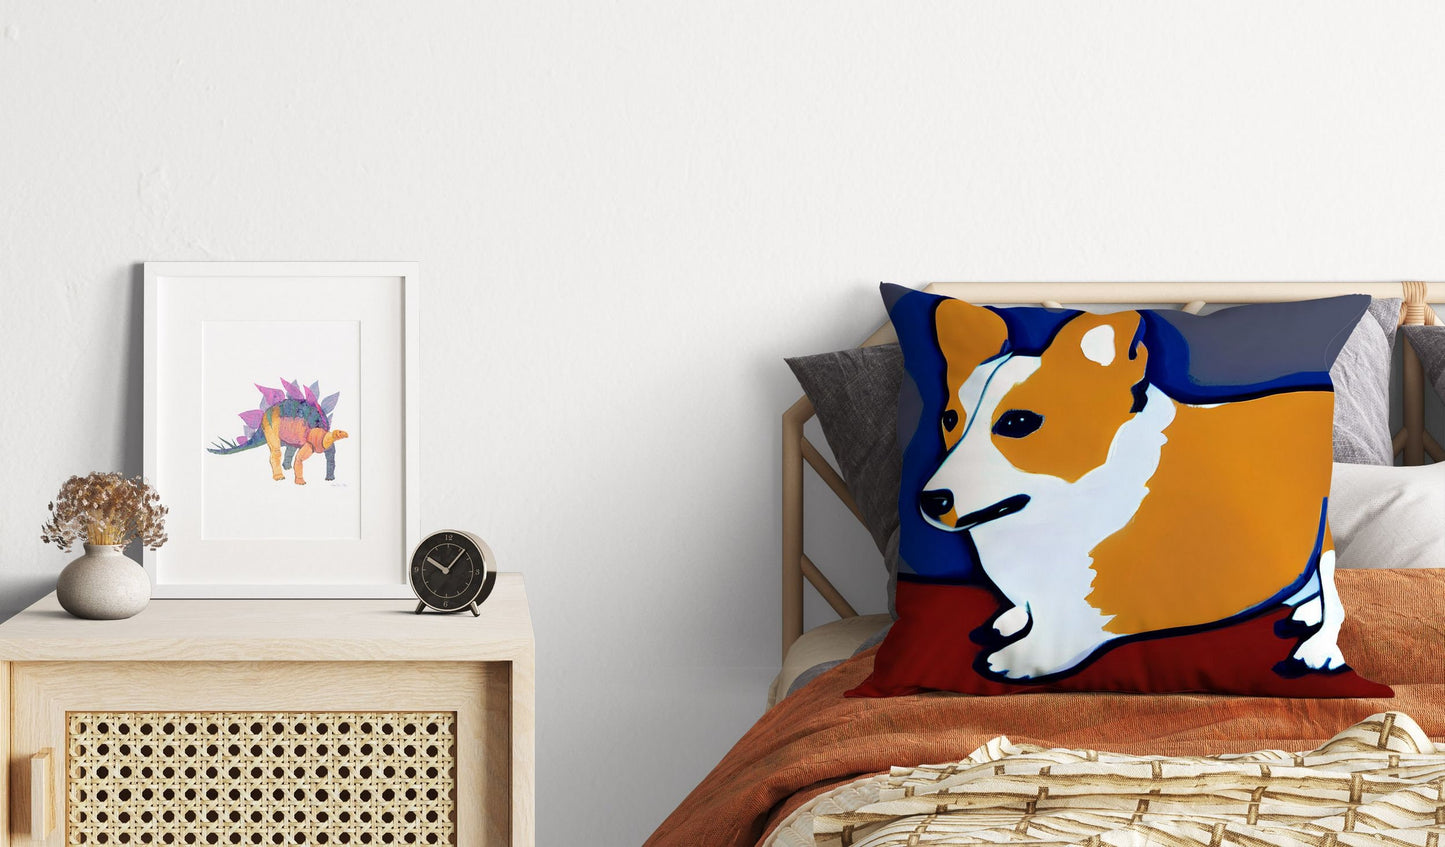 Corgi Dog Original Art Toss Pillow, Abstract Throw Pillow Cover, Artist Pillow, Colorful Pillow Case, Home Decor Pillow, Holiday Gift